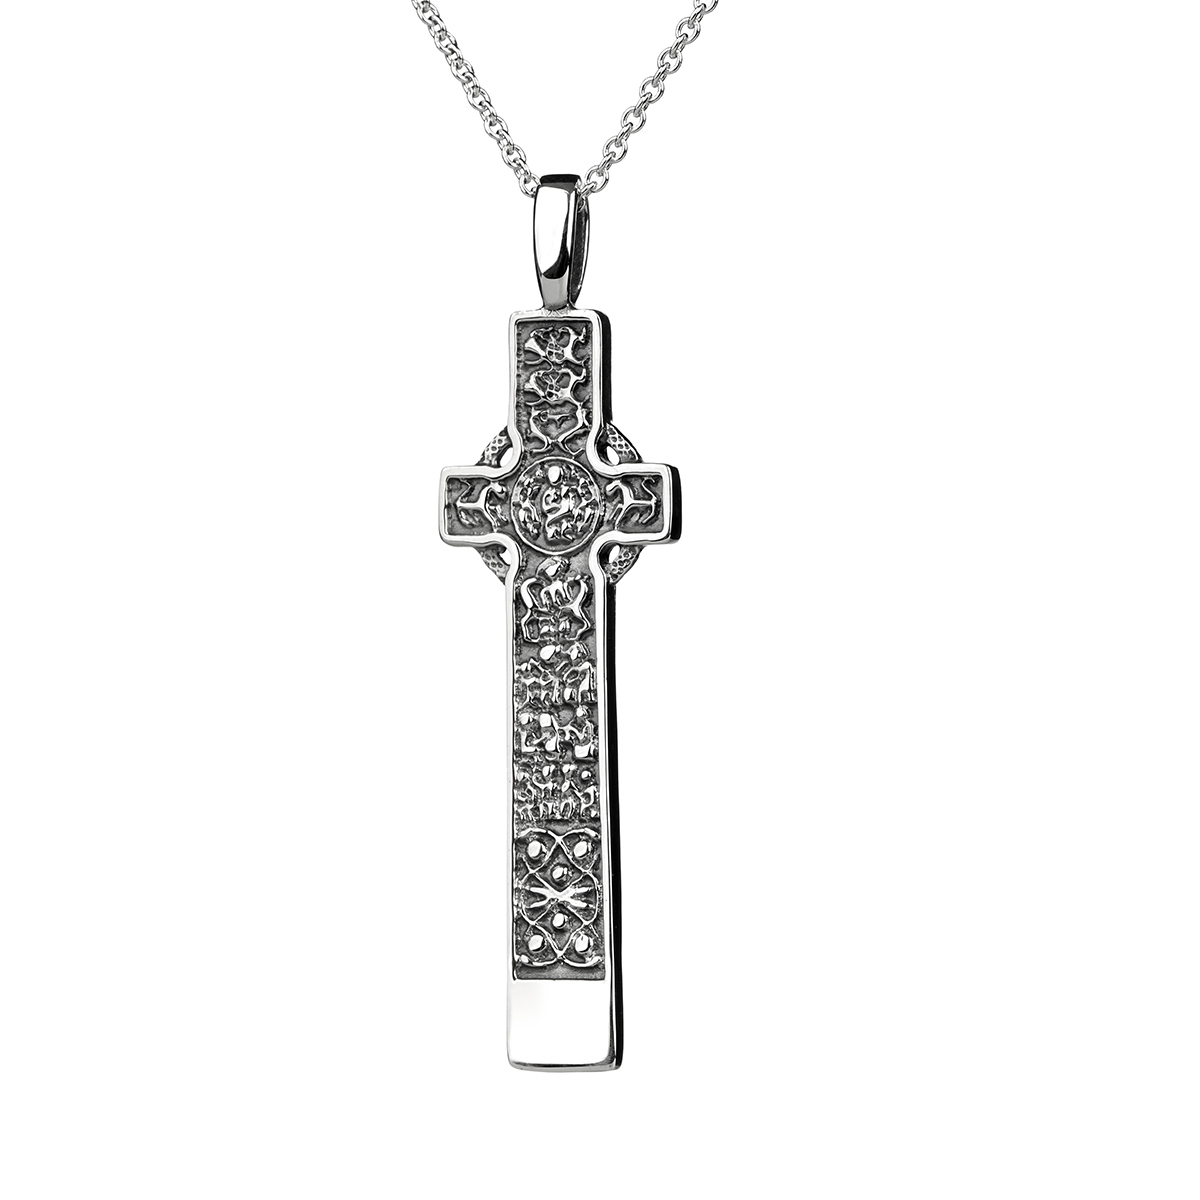 St Martin's Cross of Iona - Keltisches Kreuz aus Schottland - Sterling Silber